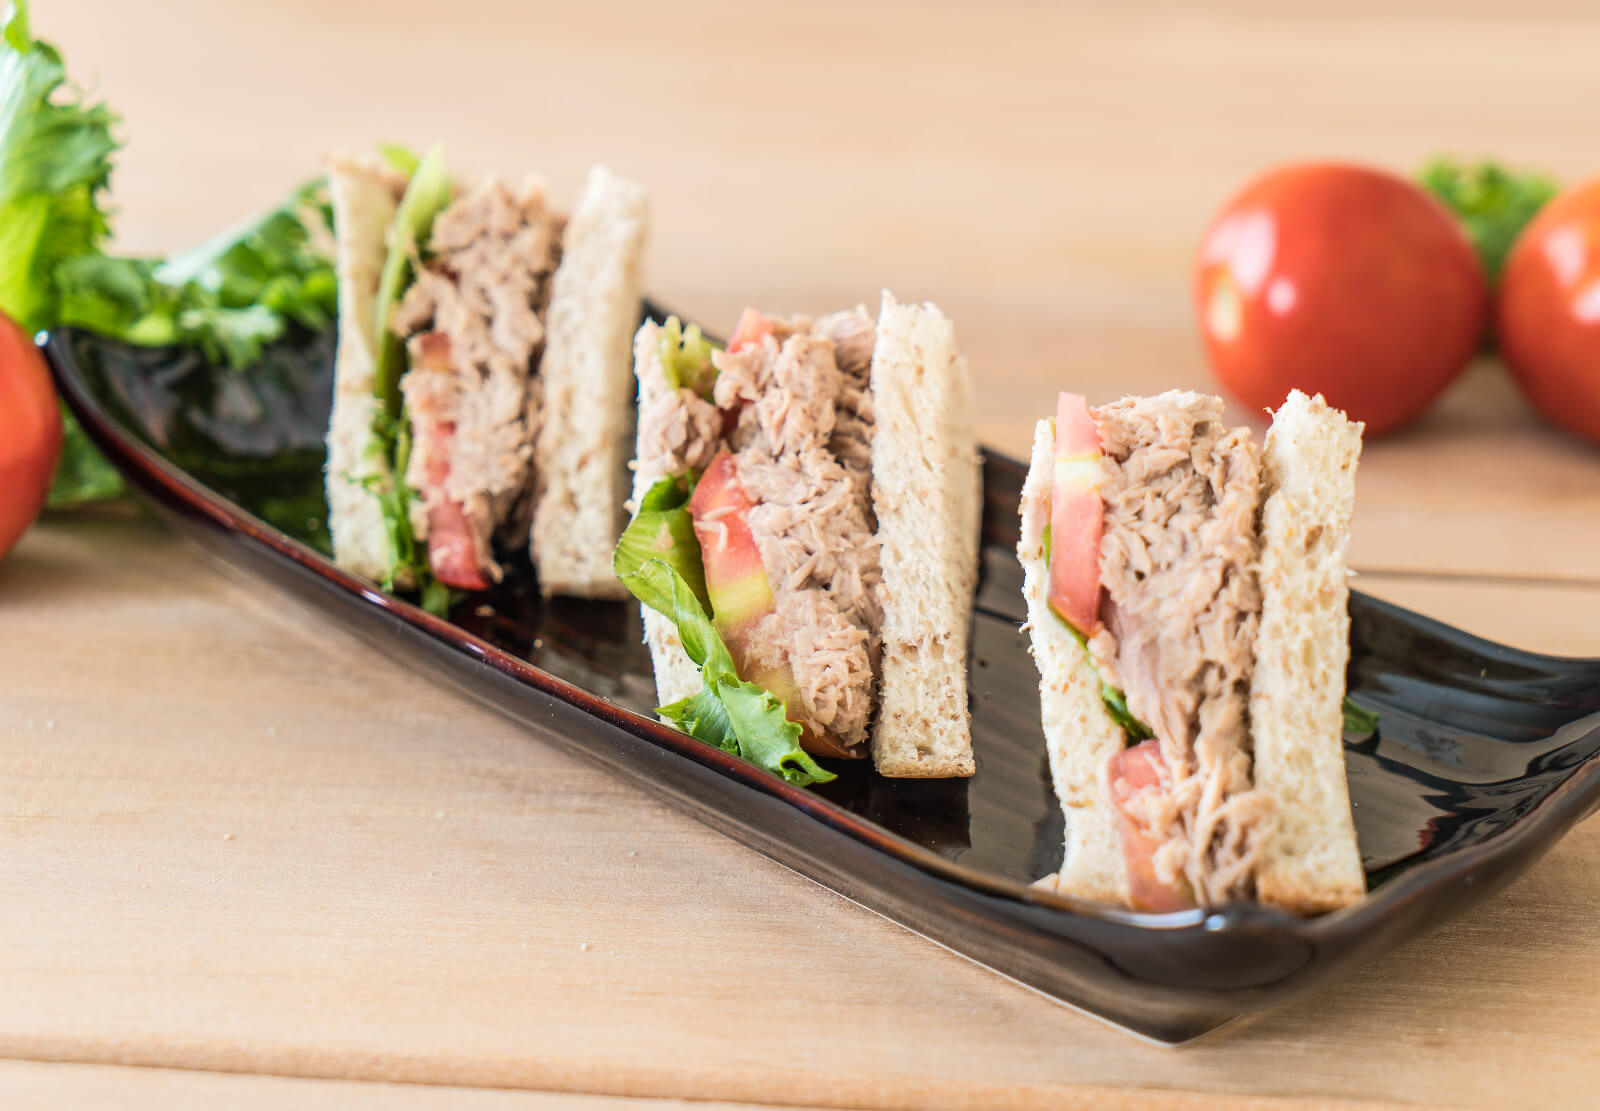 Tuna fish salad sandwiches to illustrate Bariatric Meal Prep Ideas